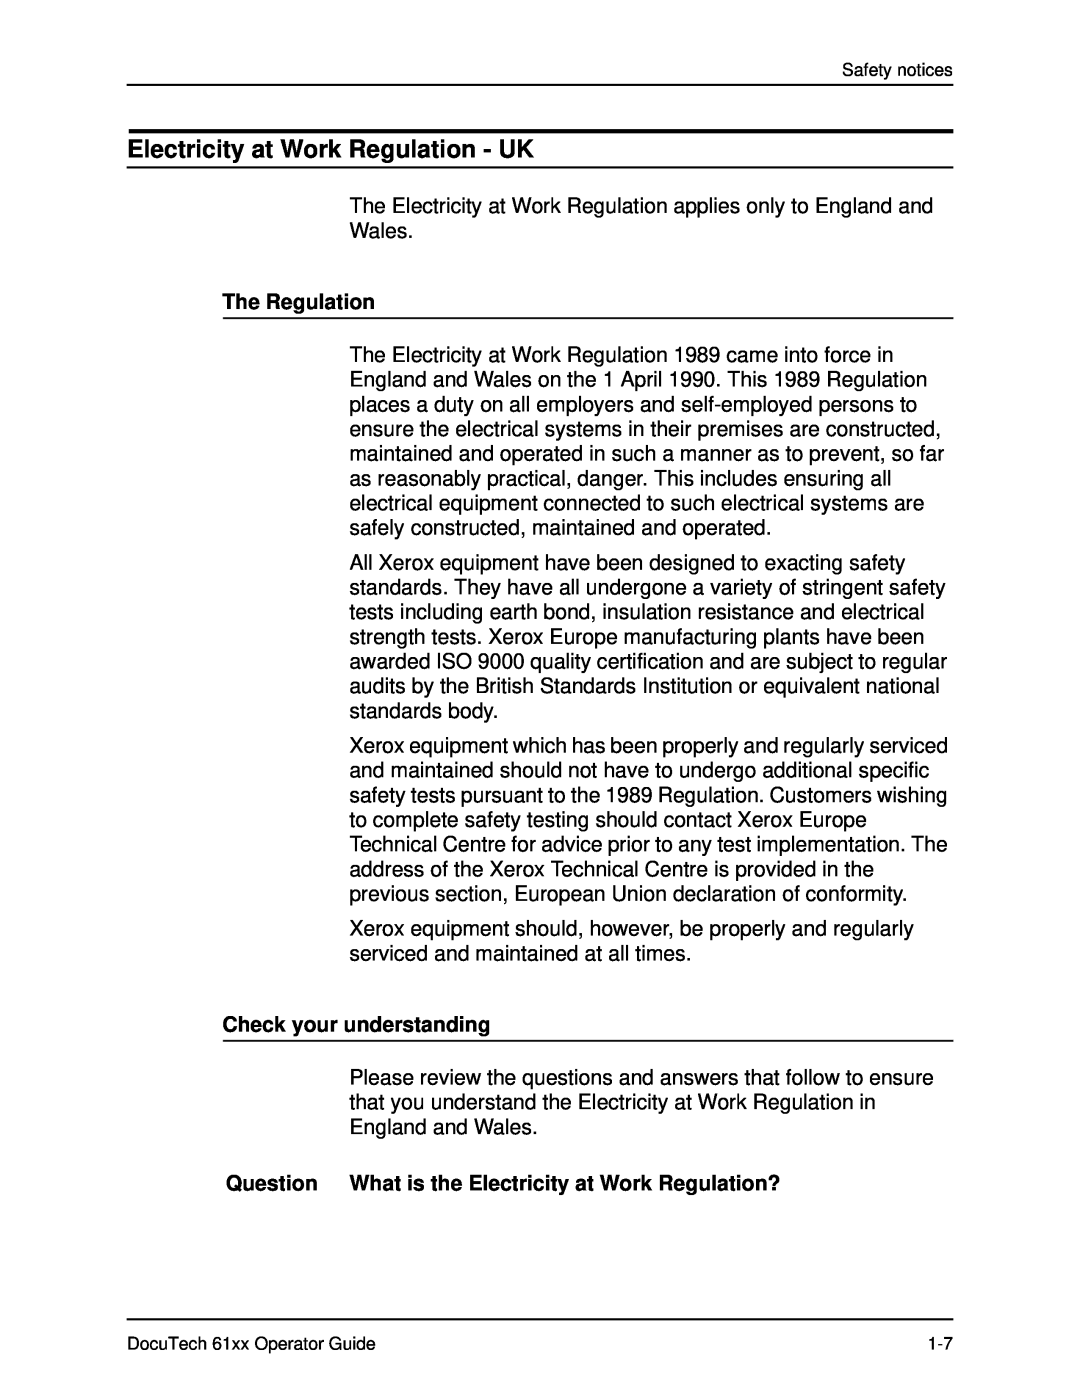 Xerox 61xx manual Electricity at Work Regulation - UK, The Regulation, Check your understanding 